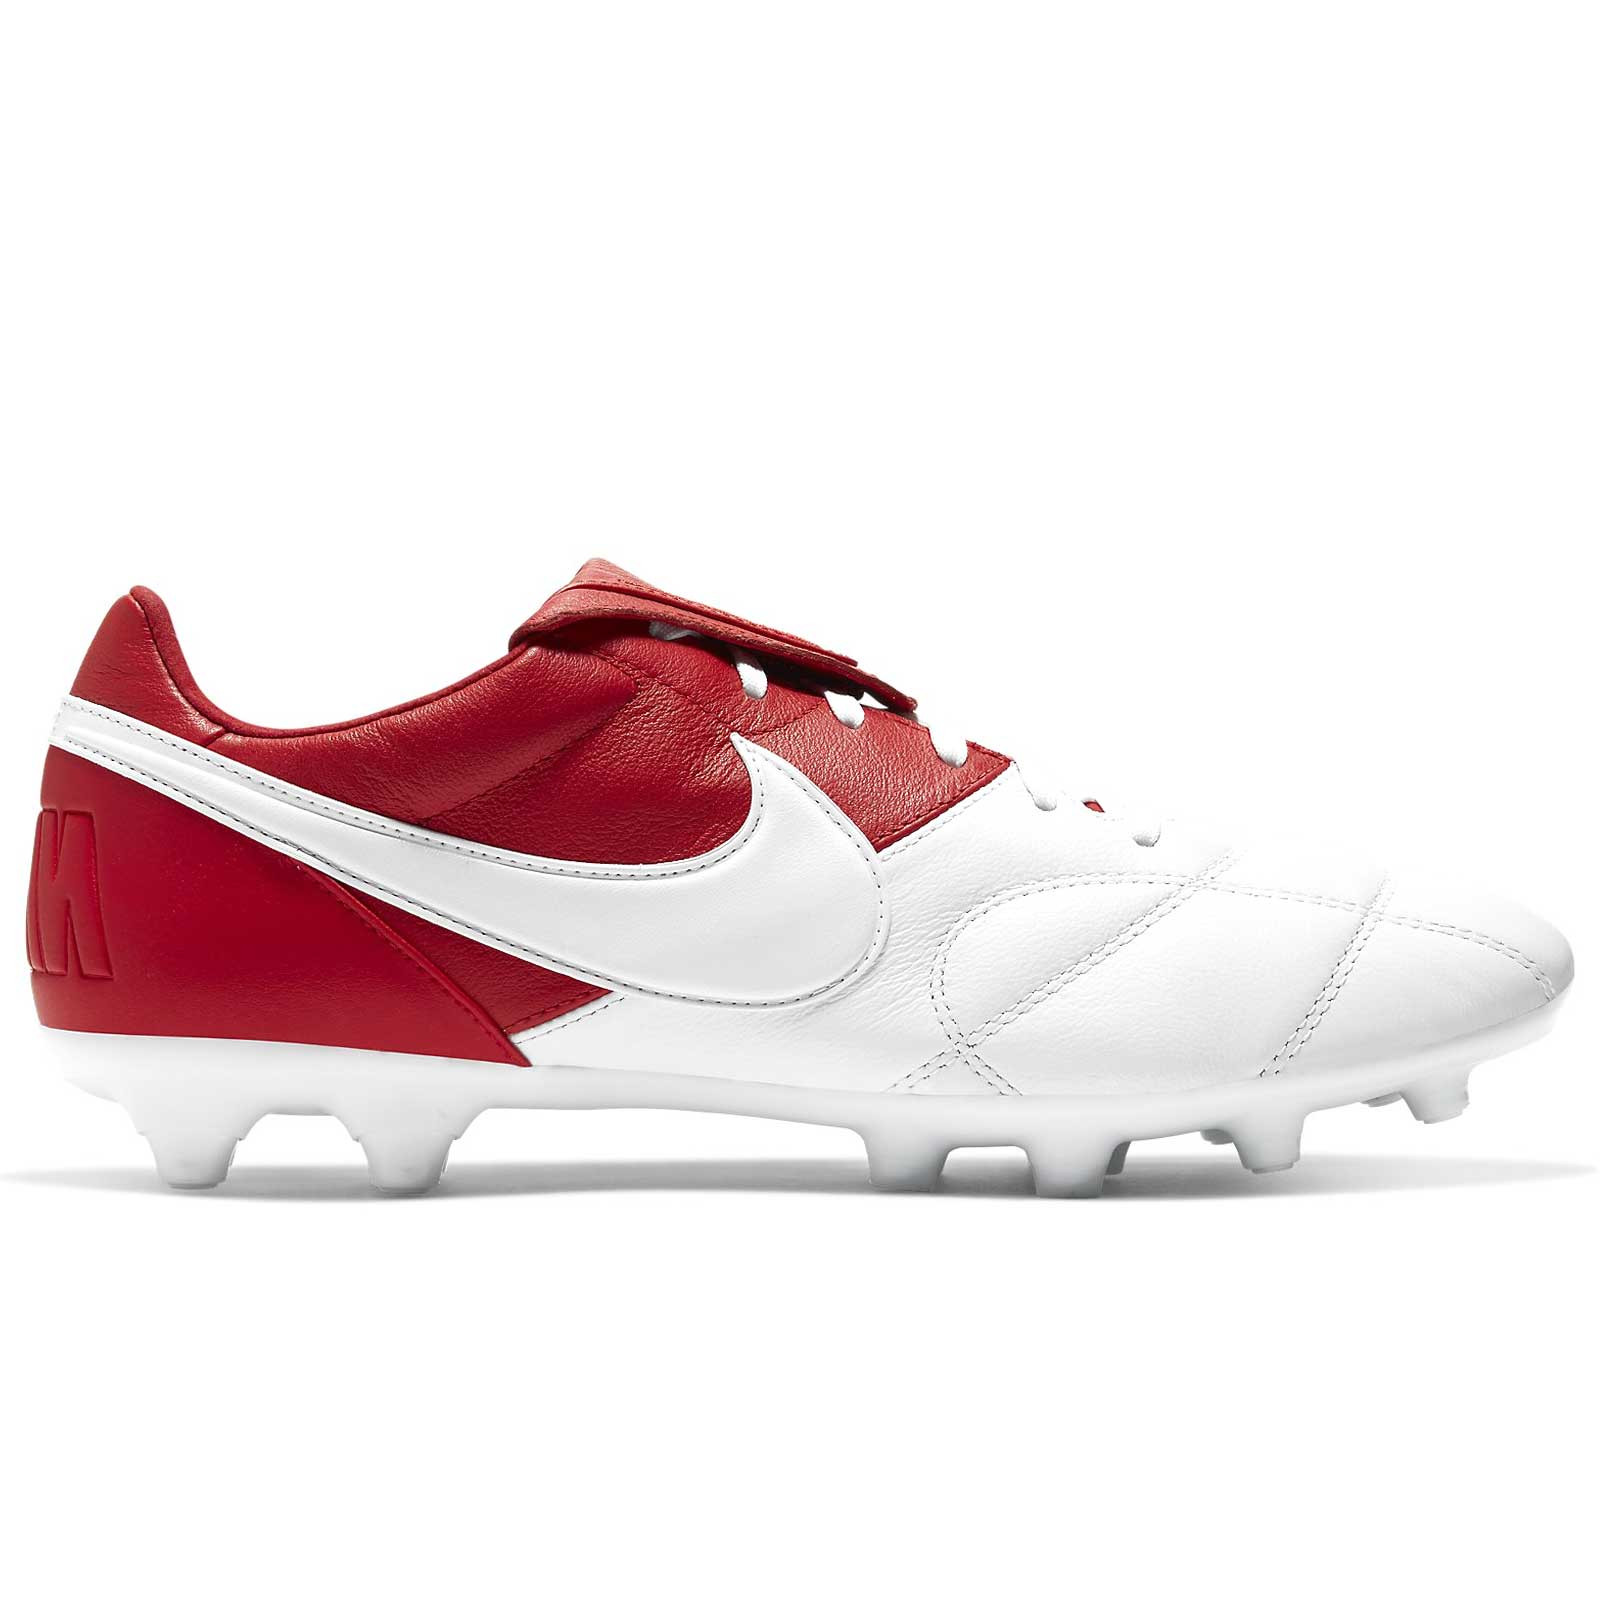 Botas Nike Premier 2 FG blancas y rojas | futbolmania